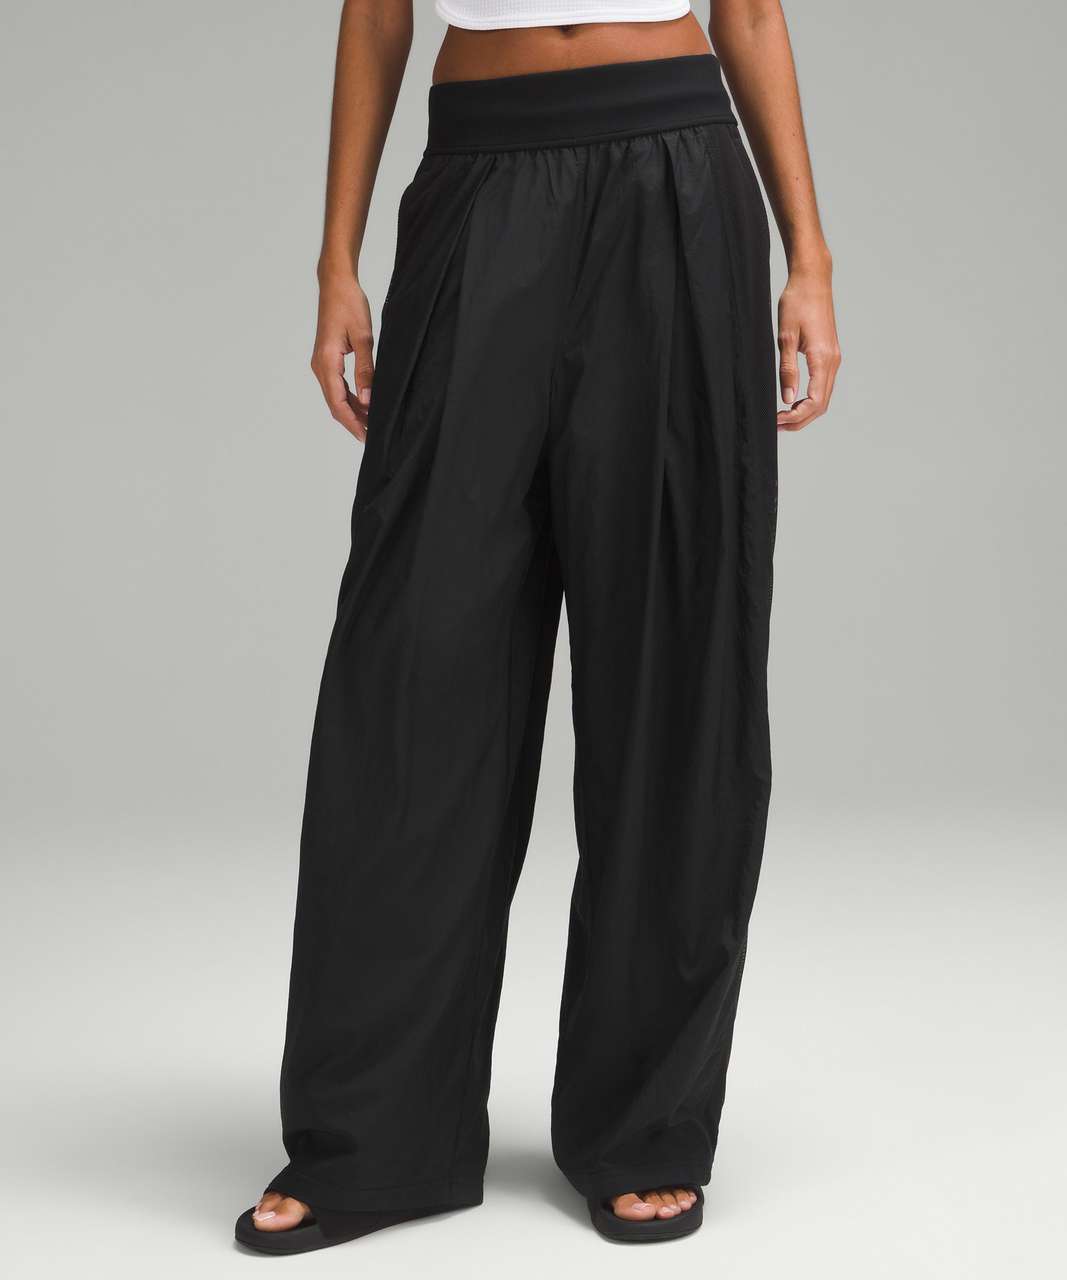 Lululemon Lightweight Tennis Mid-Rise Track Pants *Full Length - Black